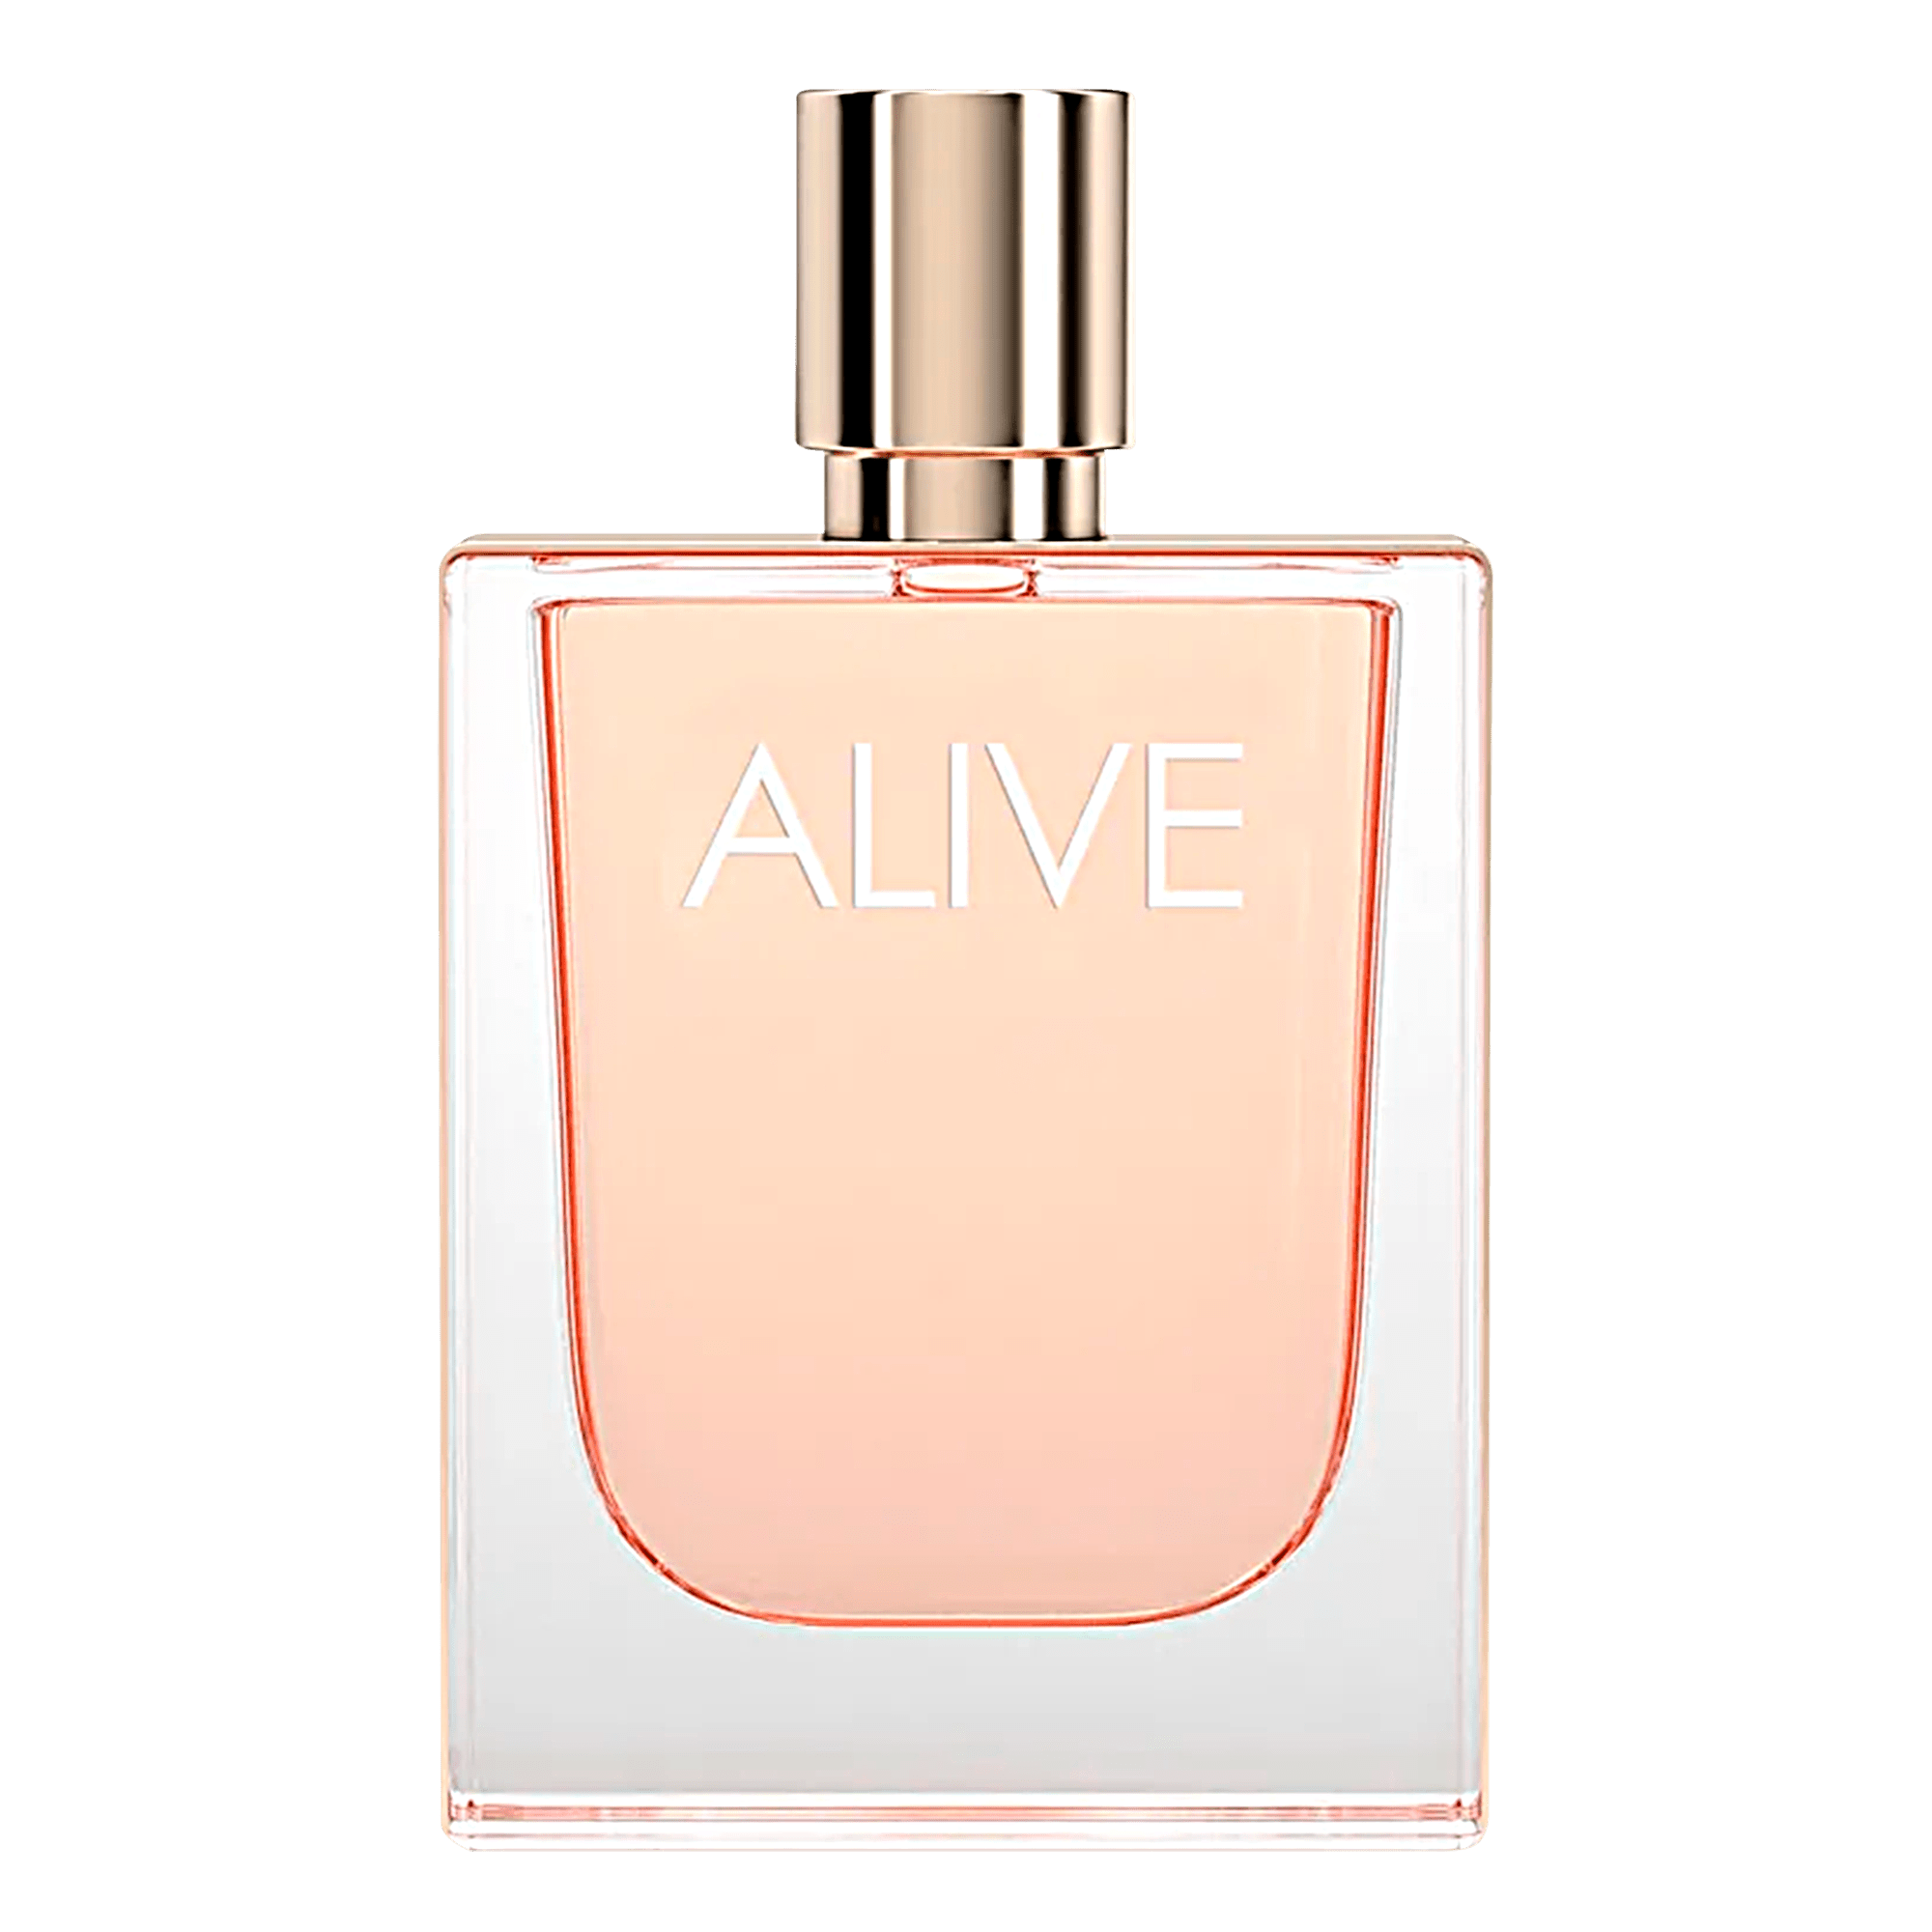 Alive Hugo Boss Eau De Parfum - Perfume Feminino 80ml